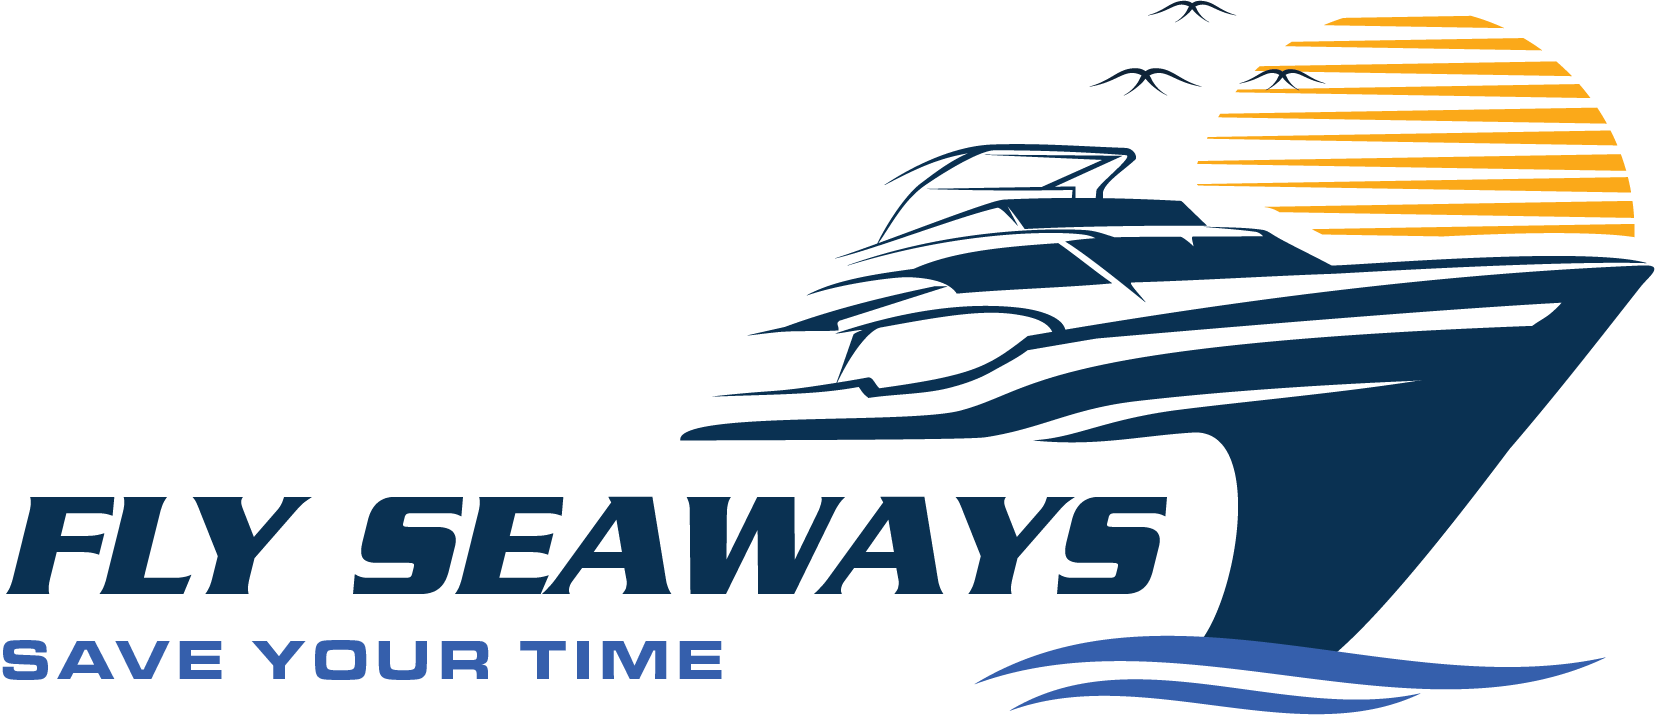 flyseaways.com